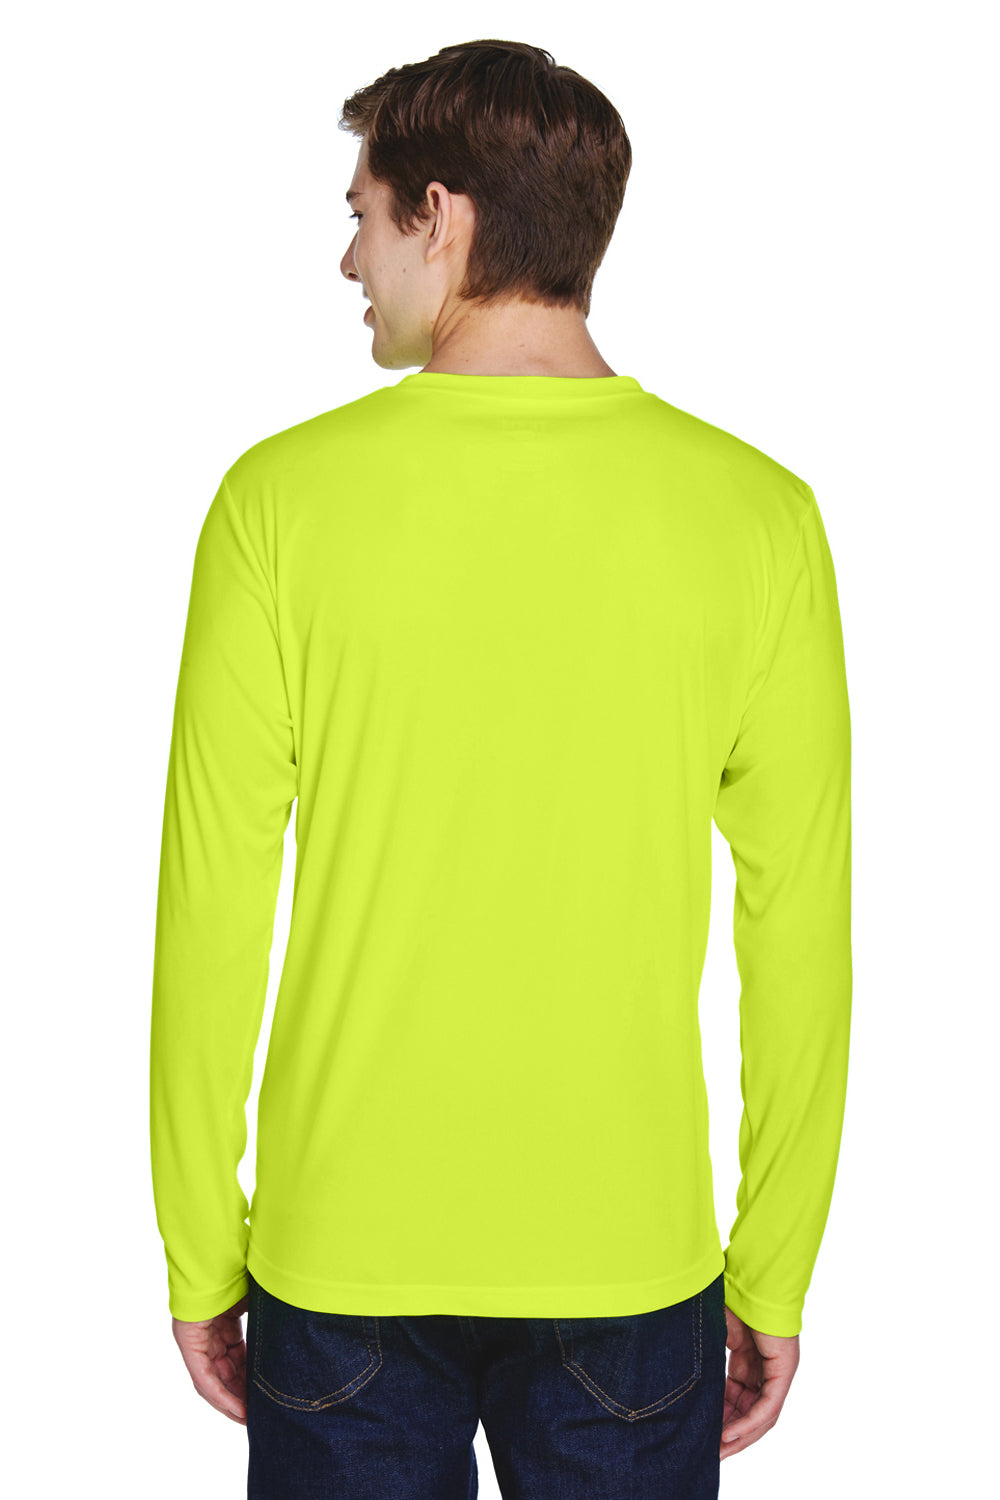 Team 365 TT11L Mens Zone Performance Moisture Wicking Long Sleeve Crewneck T-Shirt Safety Yellow Back